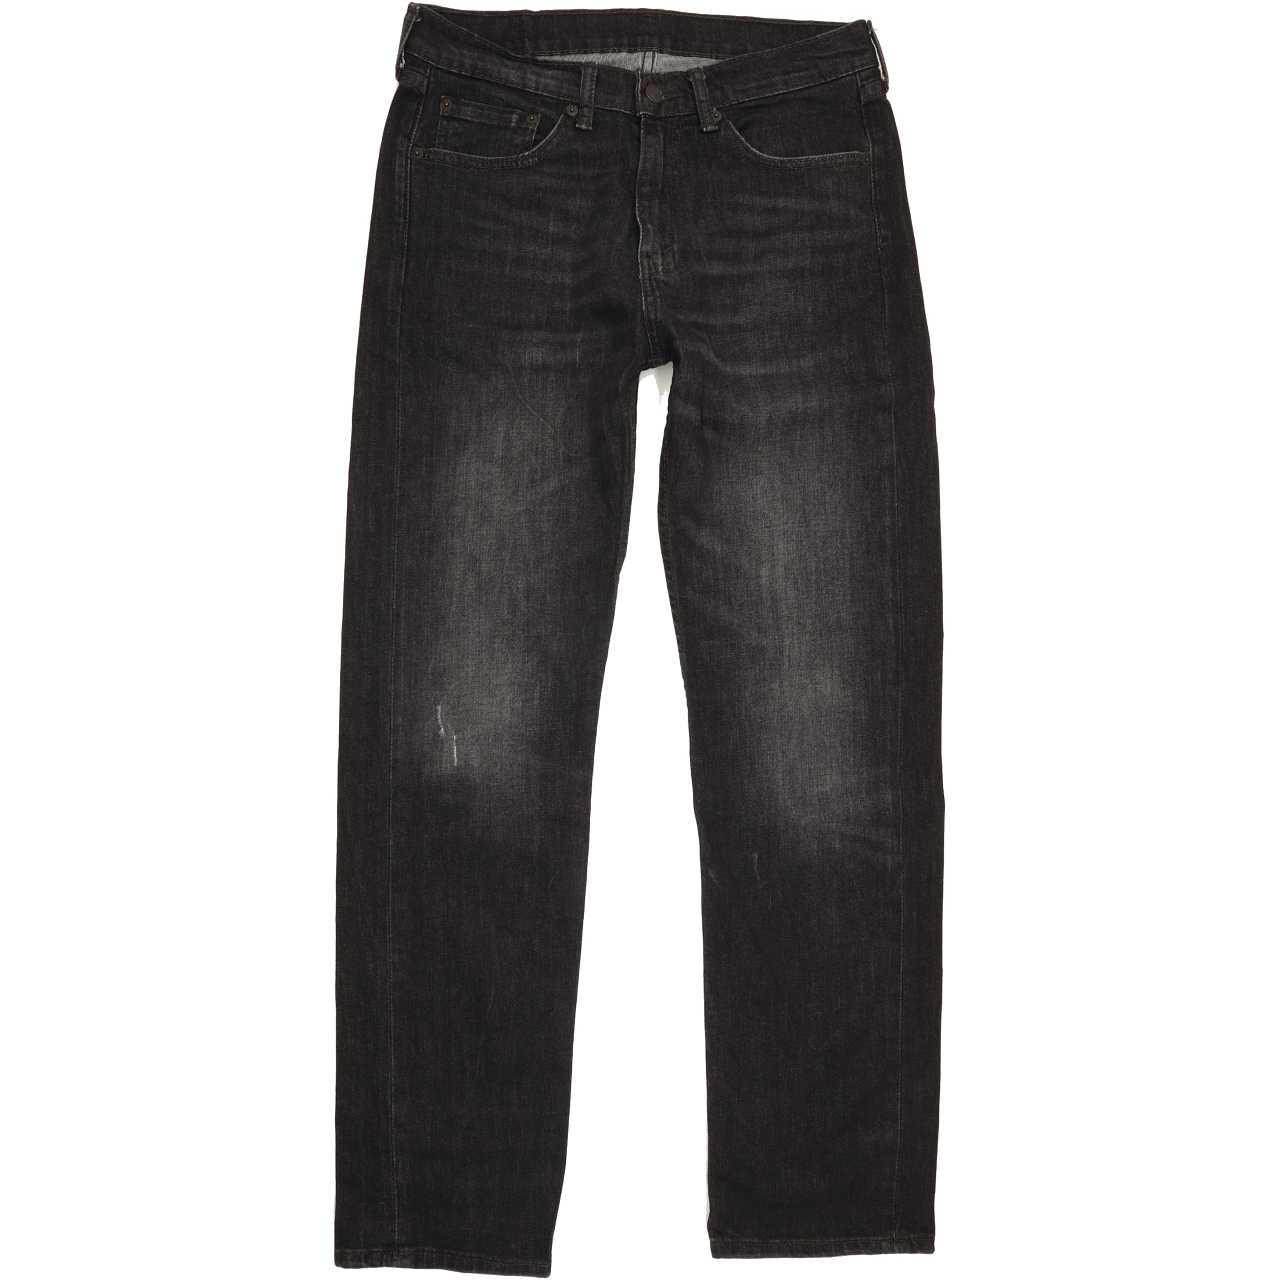 Levi's 505 Men Black Straight Regular Stretch Jeans W32 L32 (80061)